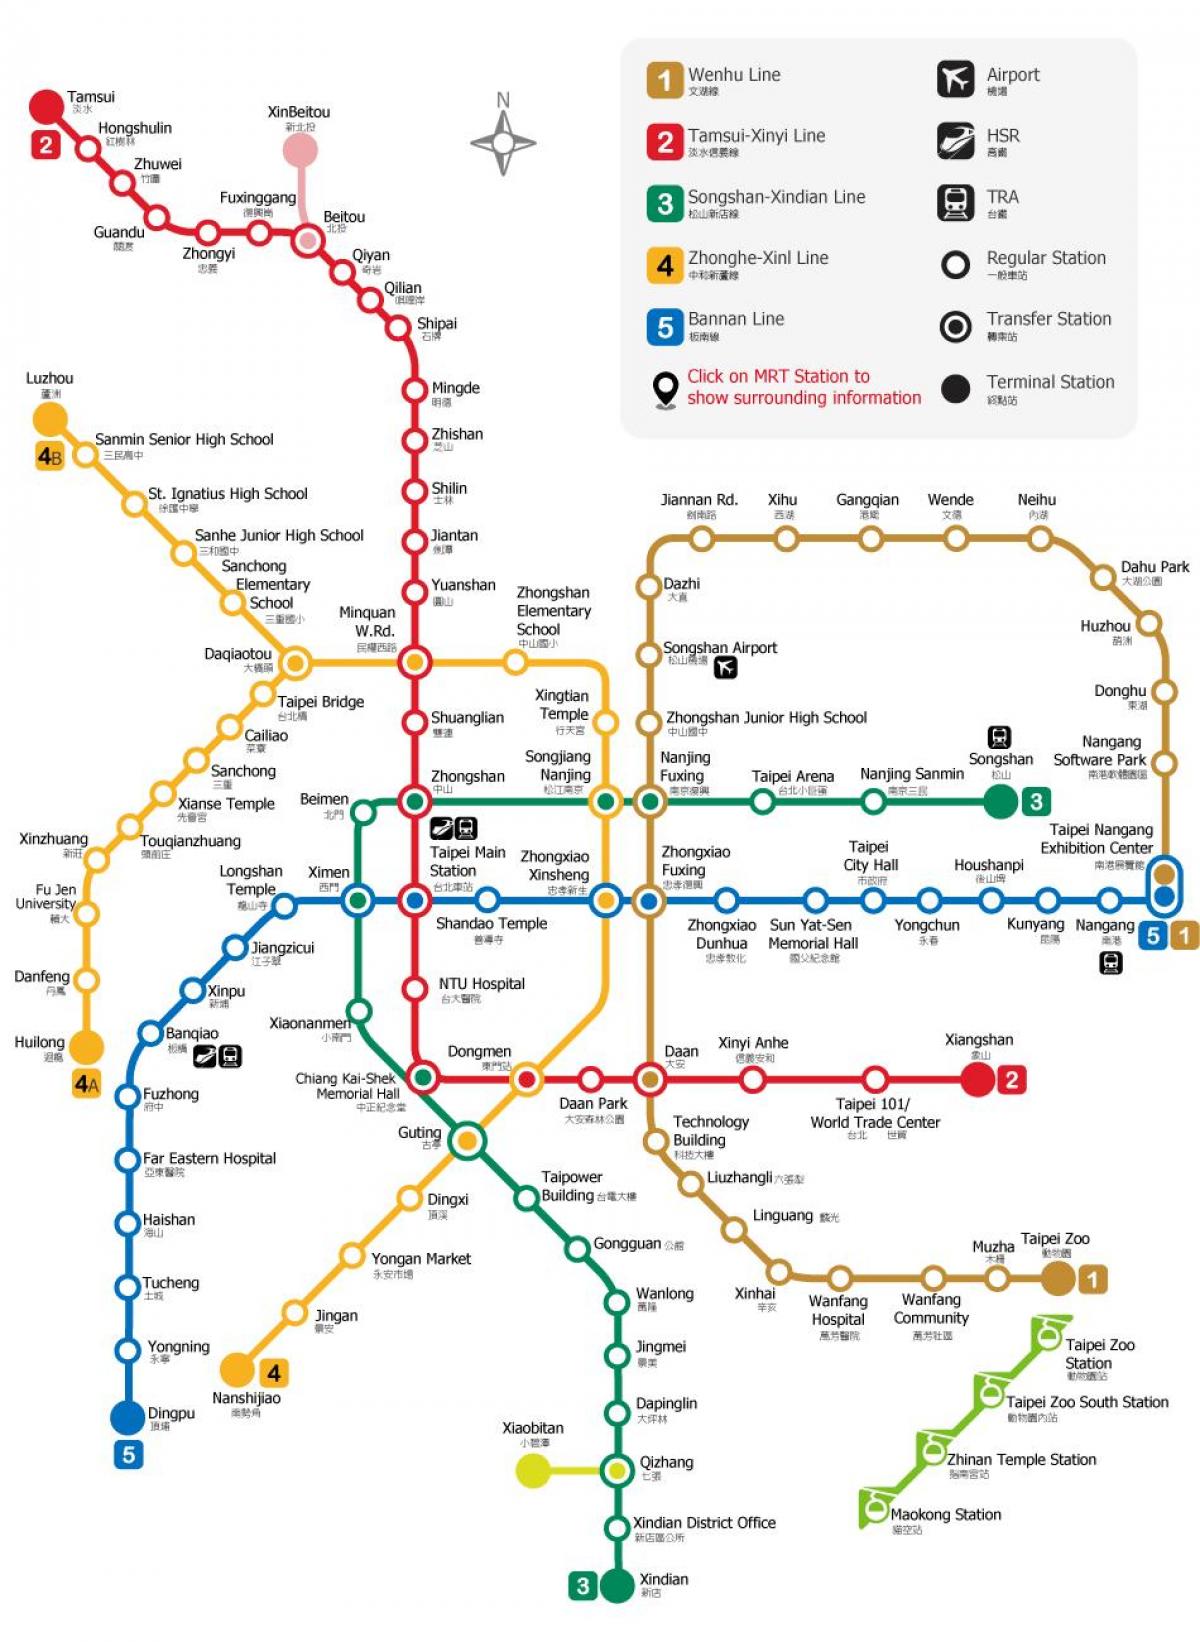 Taipei estasyon tren kat jeyografik